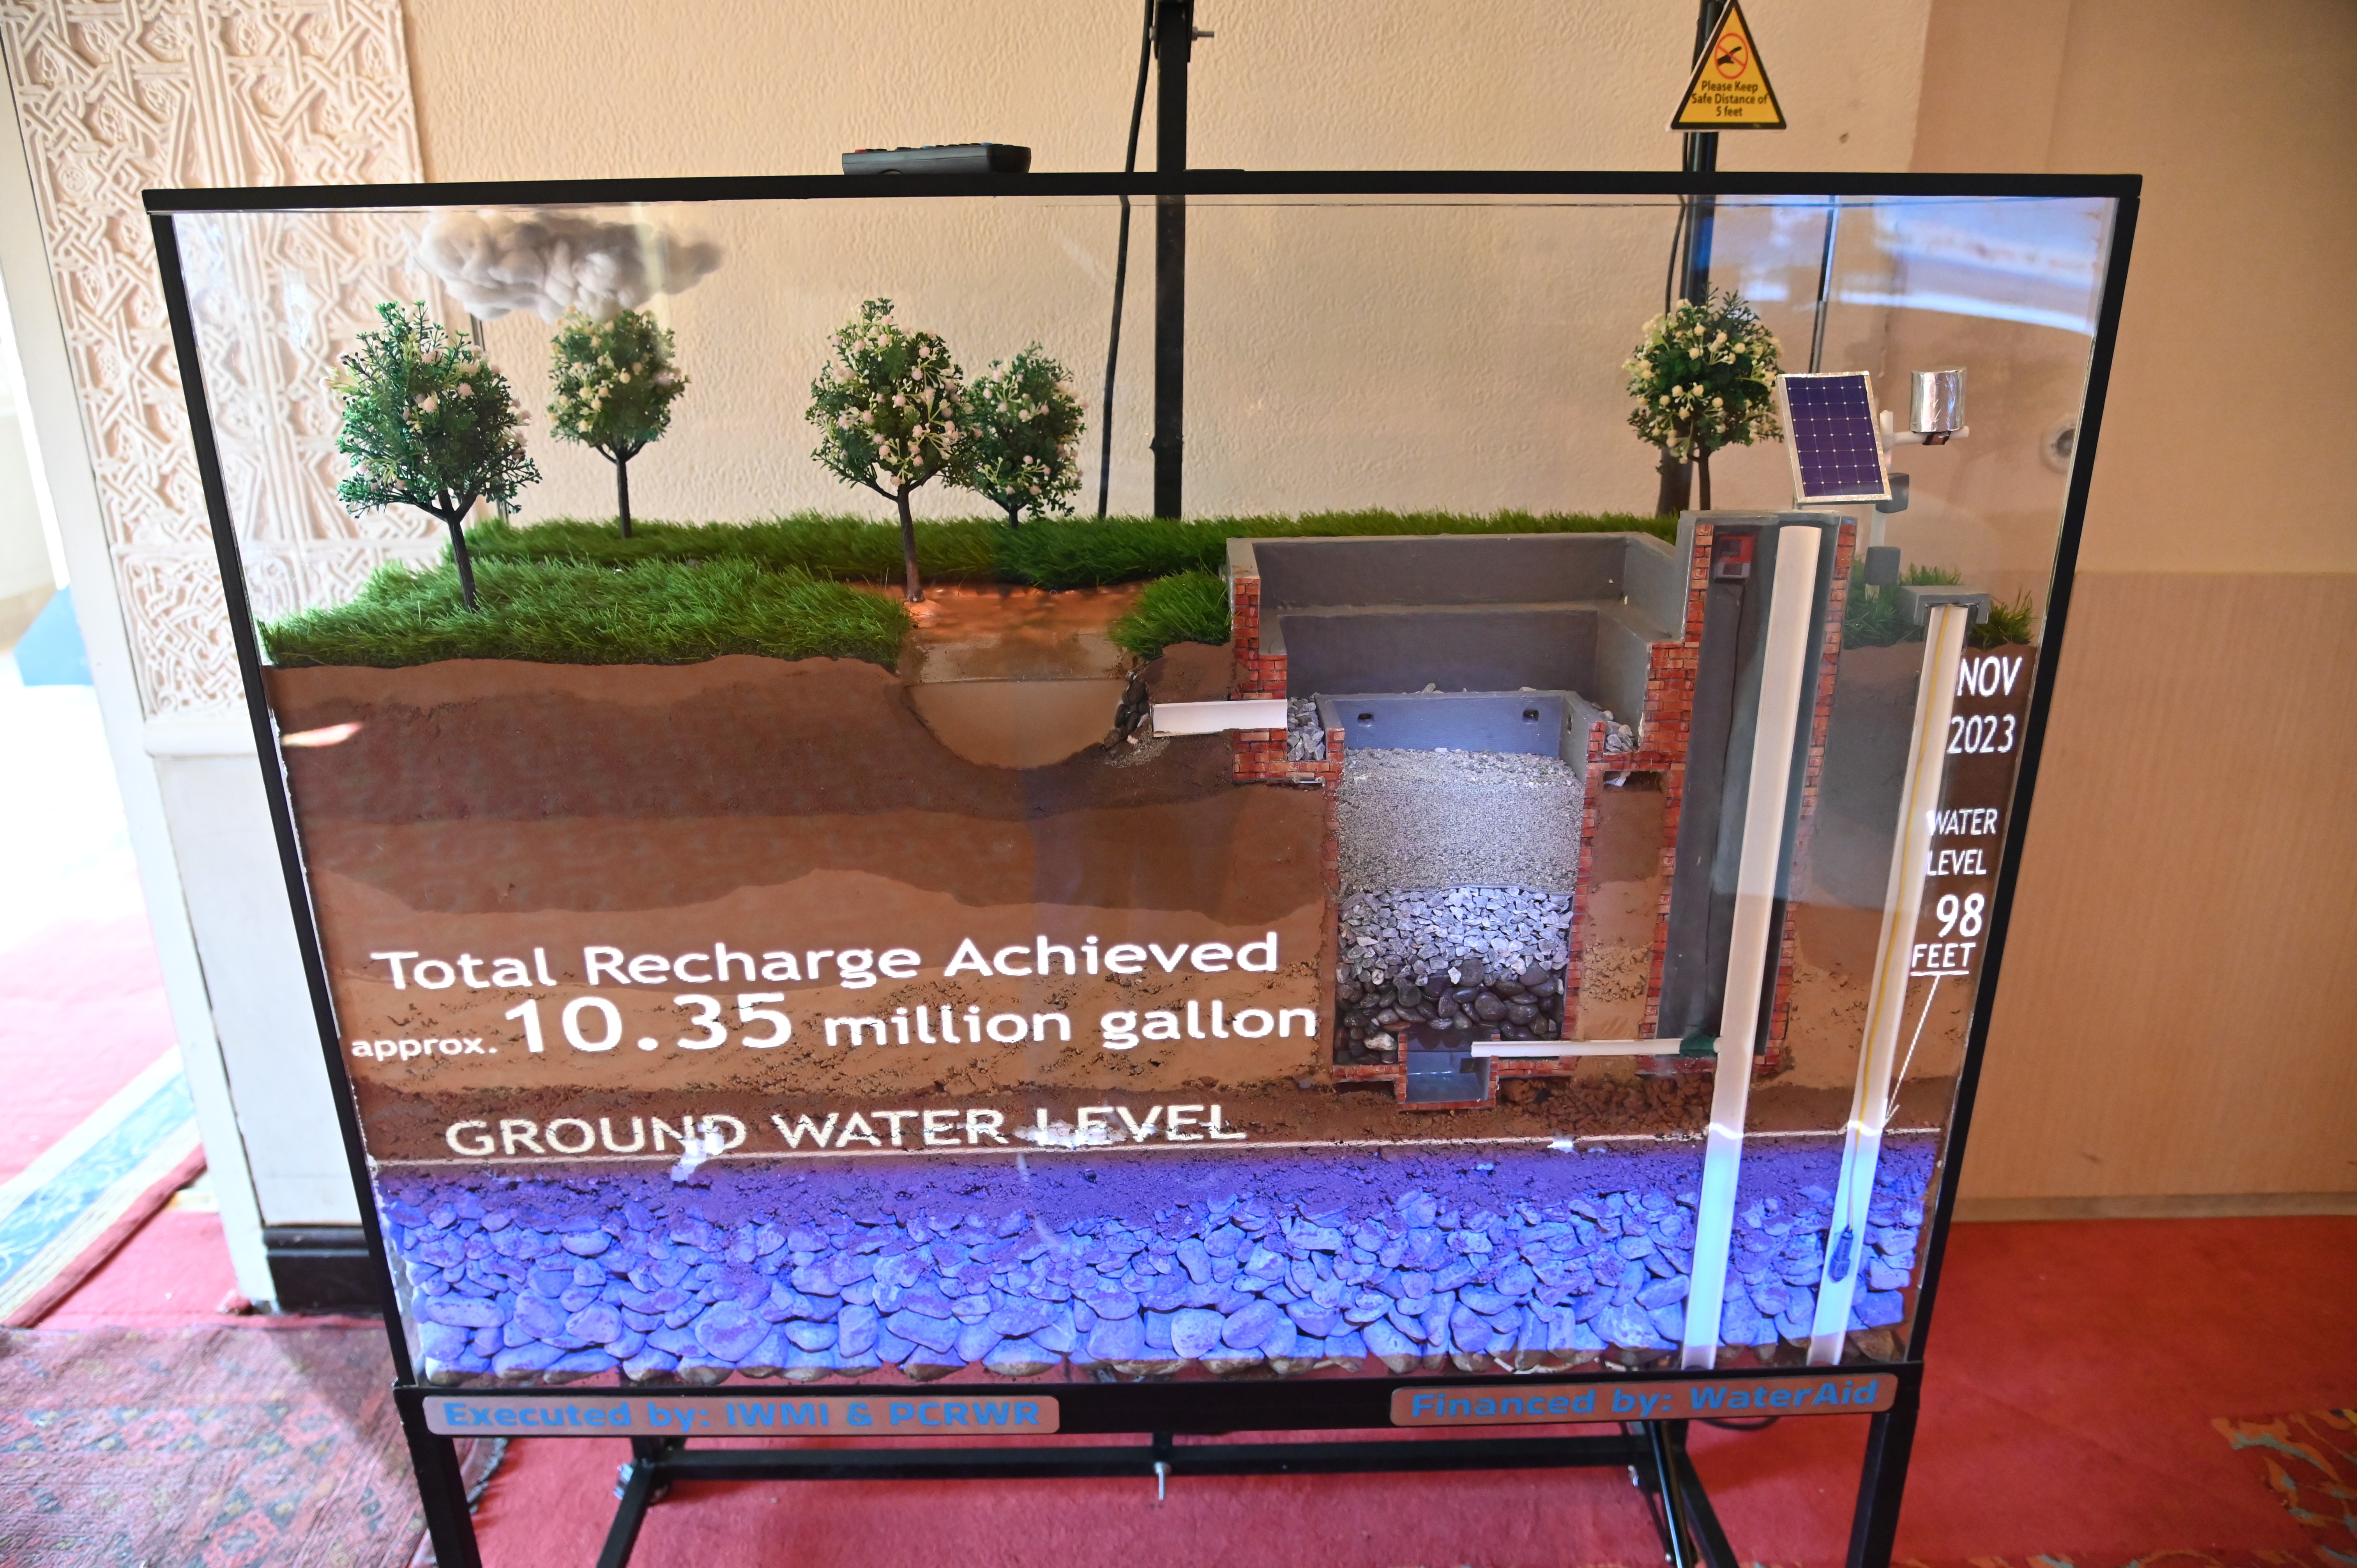 A model explaining ground water level since november 2023